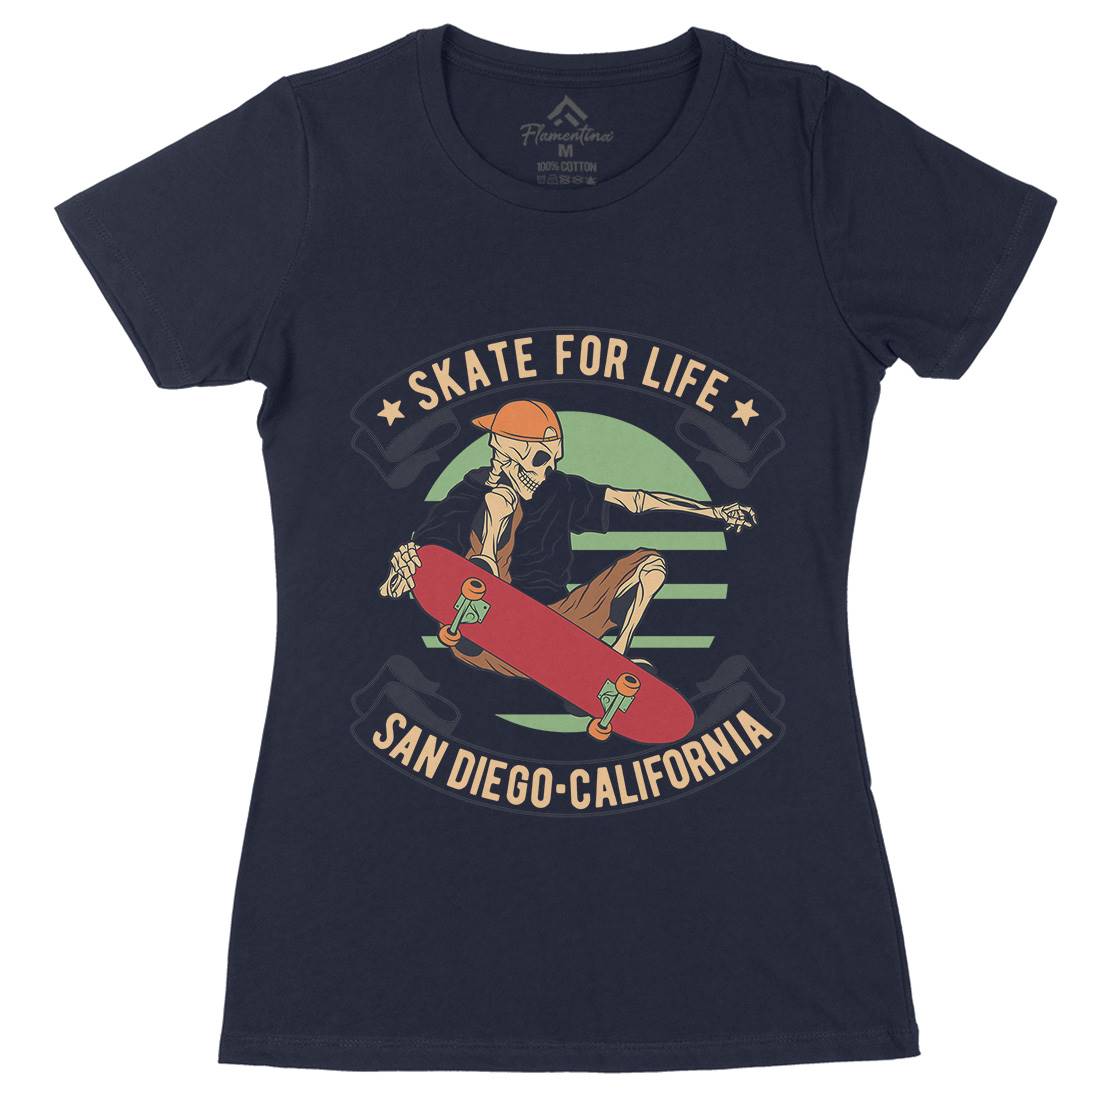 For Life Womens Organic Crew Neck T-Shirt Skate D970